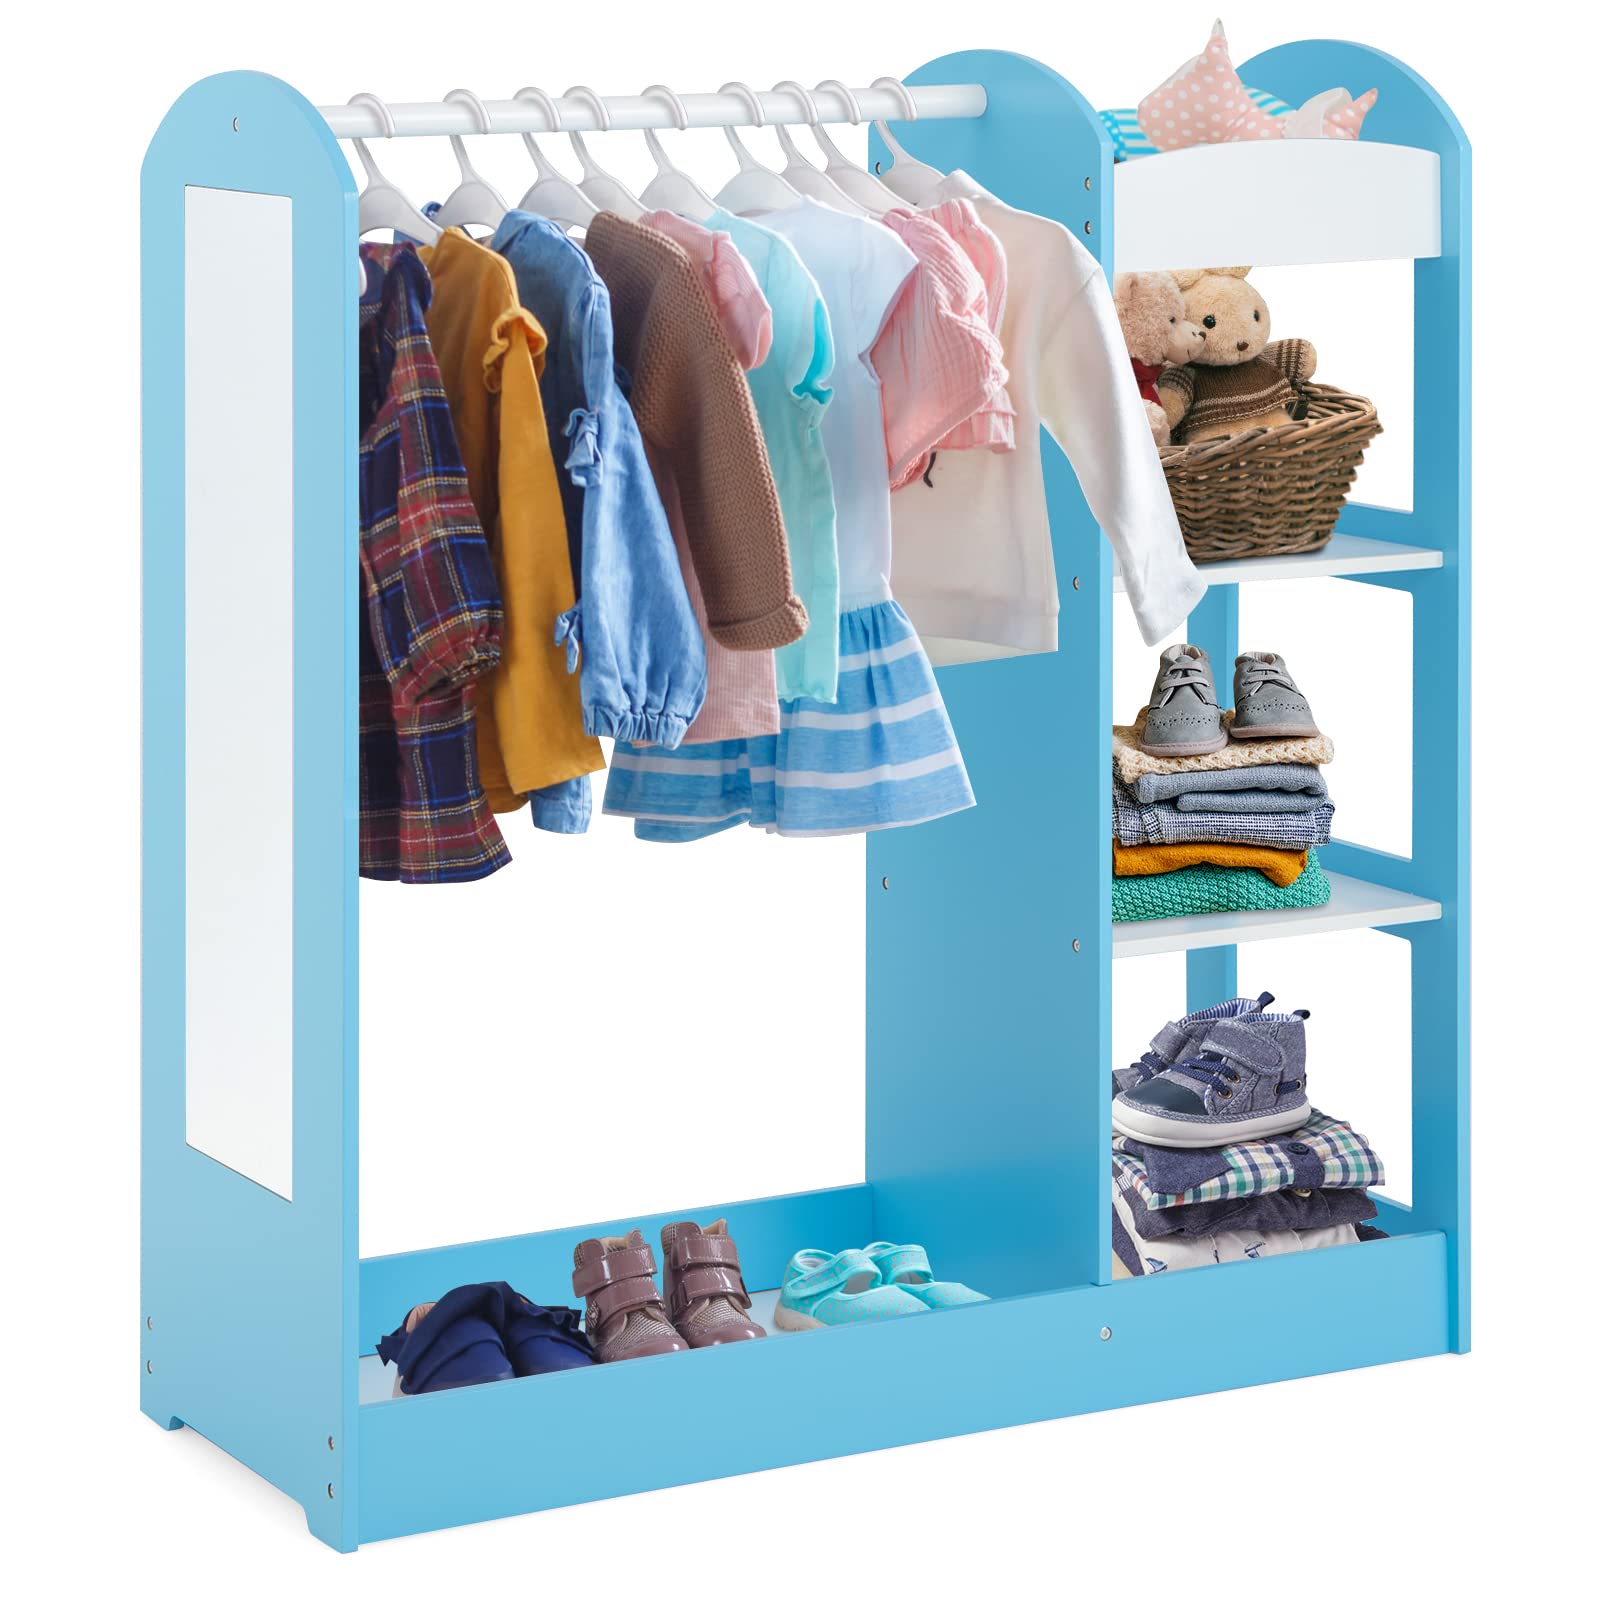 Kids' clothing rack with storage